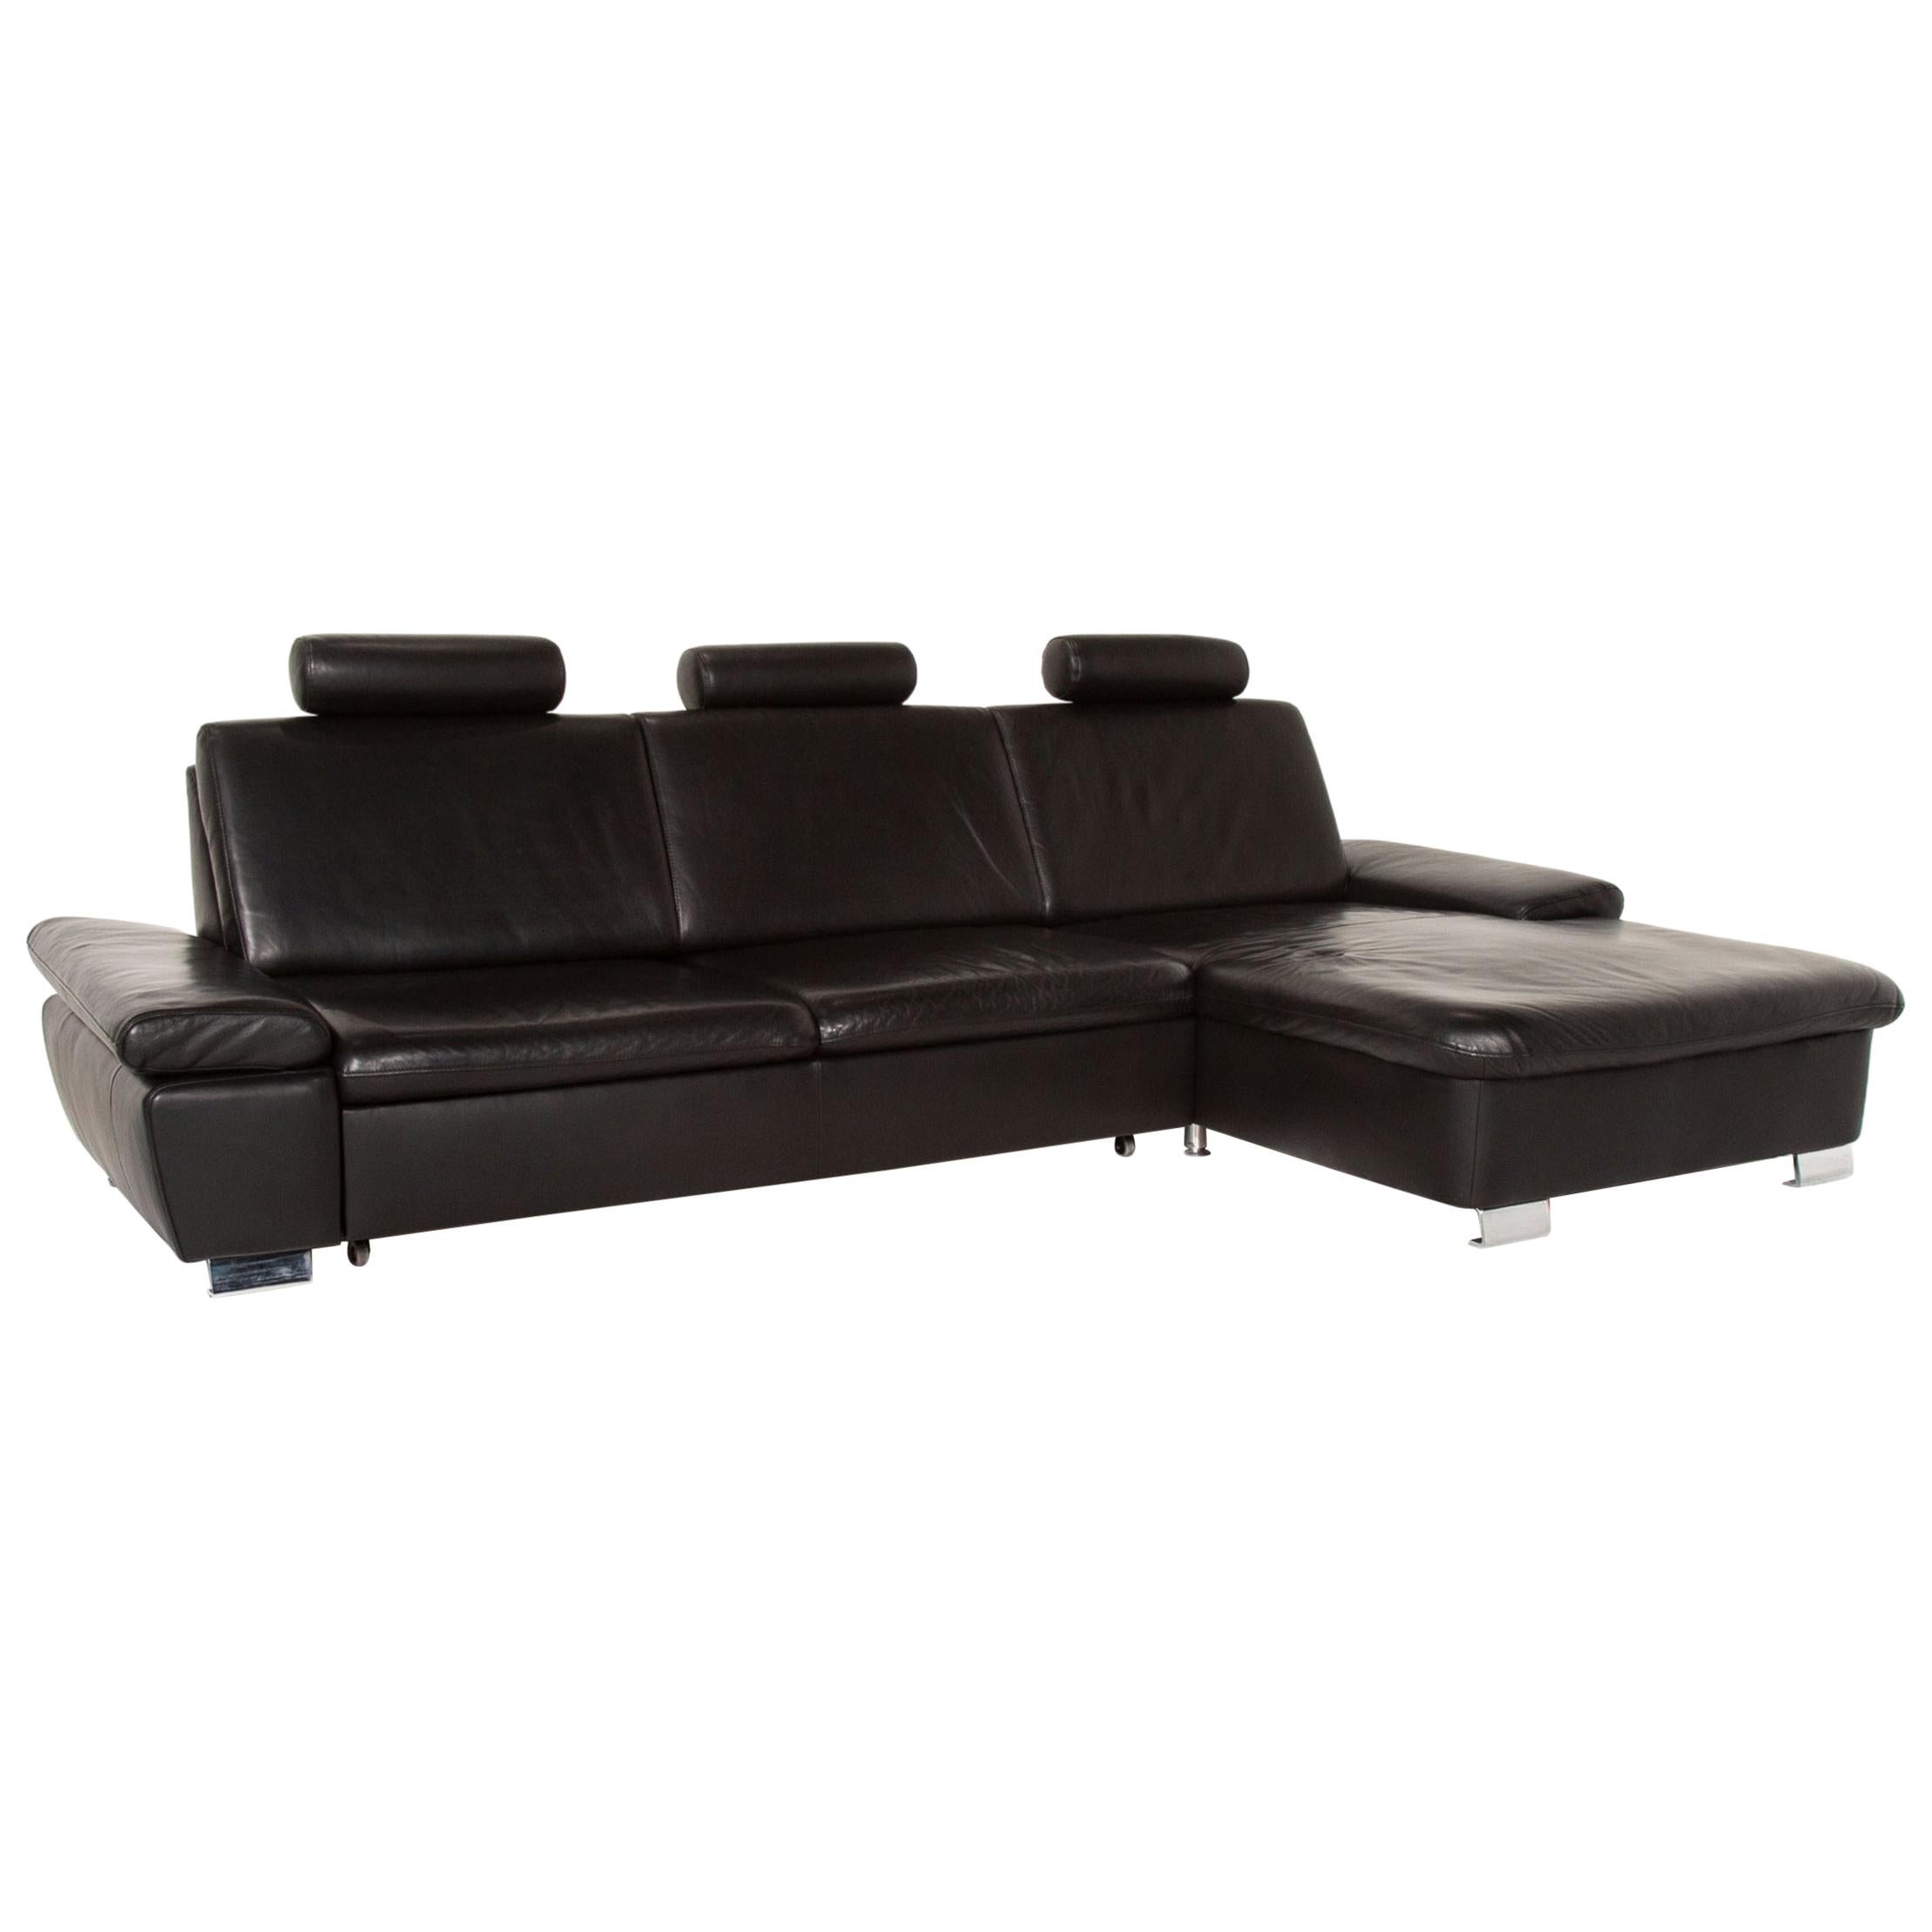 Mondo Leather Corner Sofa Black Sofa Function Sleep Function Sofa Bed Couch For Sale